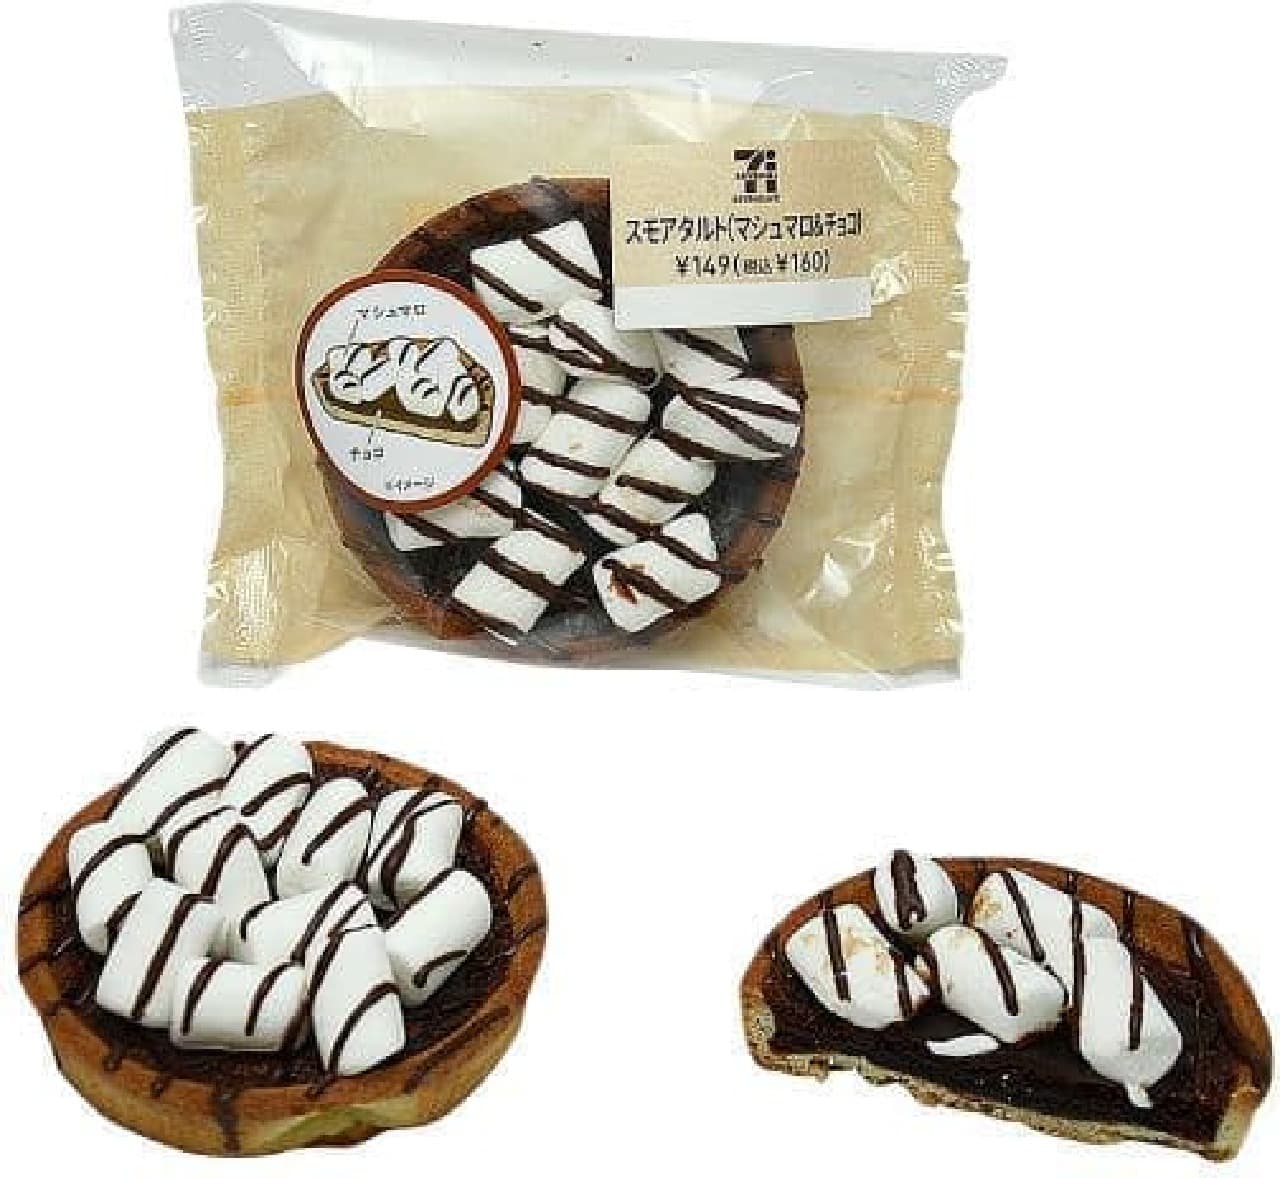 7-ELEVEN "Smoatart (marshmallow & chocolate)"